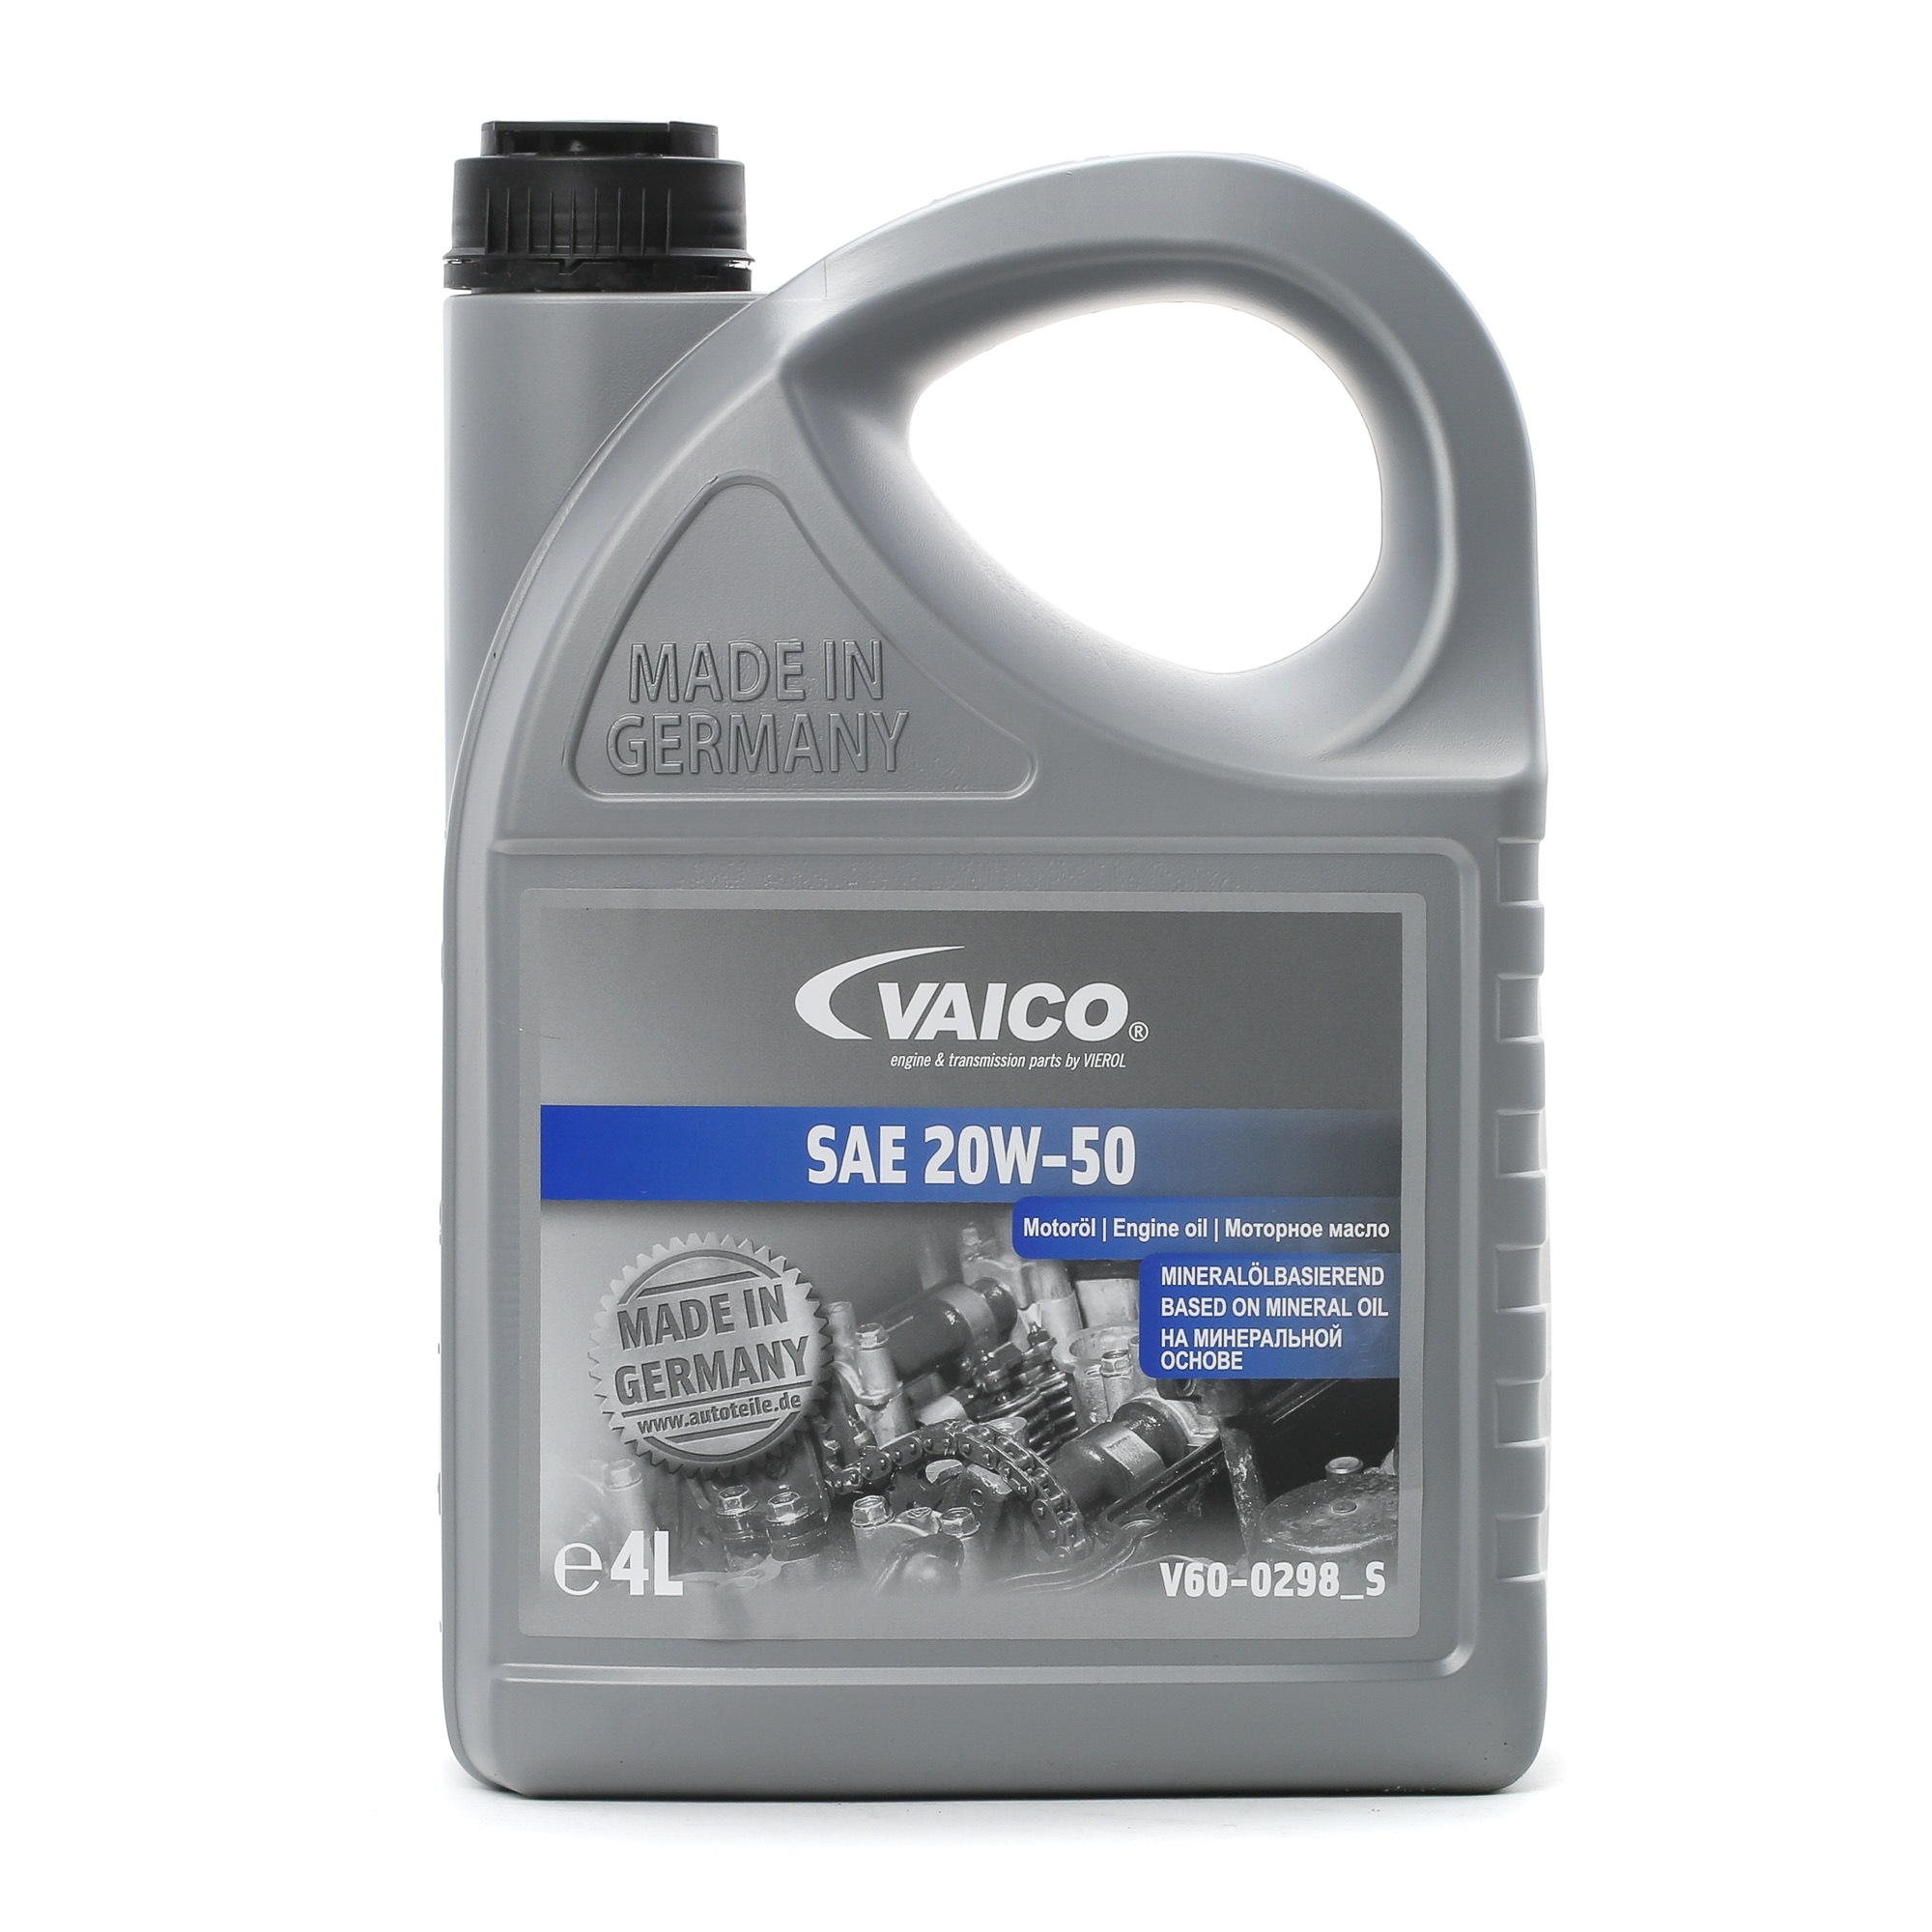 VAICO V60-0298_S Engine oil HONDA experience and price